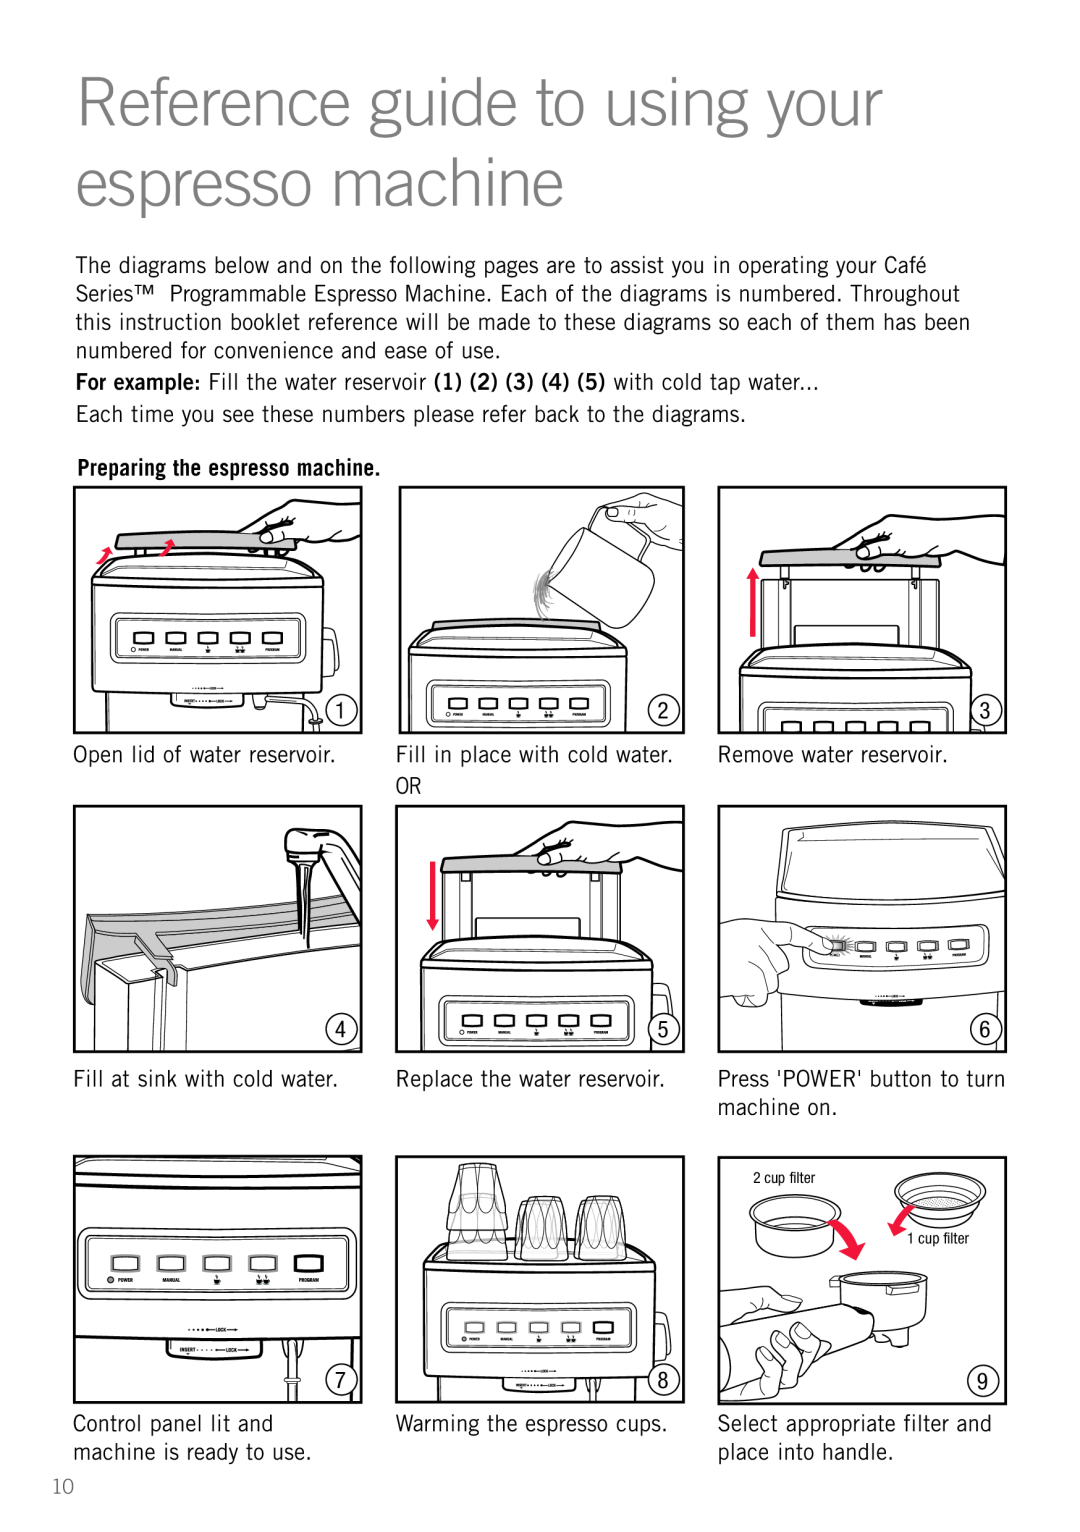 Sunbeam EM5800 manual Reference guide to using your espresso machine, Preparing the espresso machine 